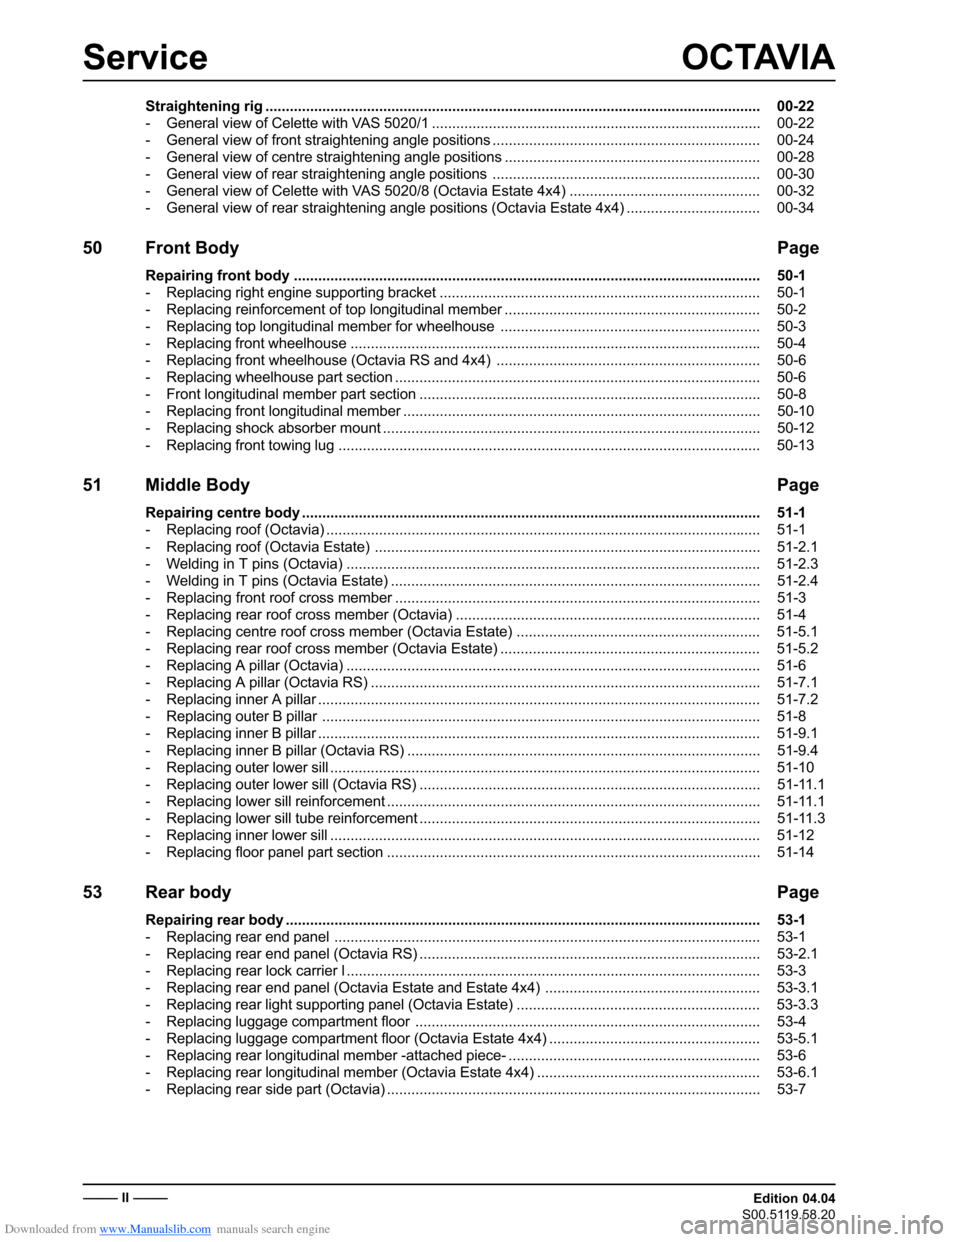 SKODA OCTAVIA 1997 1.G / (1U) Body Repairs Workshop Manual Downloaded from www.Manualslib.com manuals search engine ������� �������
�������������
��������������
����������������
� ������������
����������������� ������������������������������������� ����������